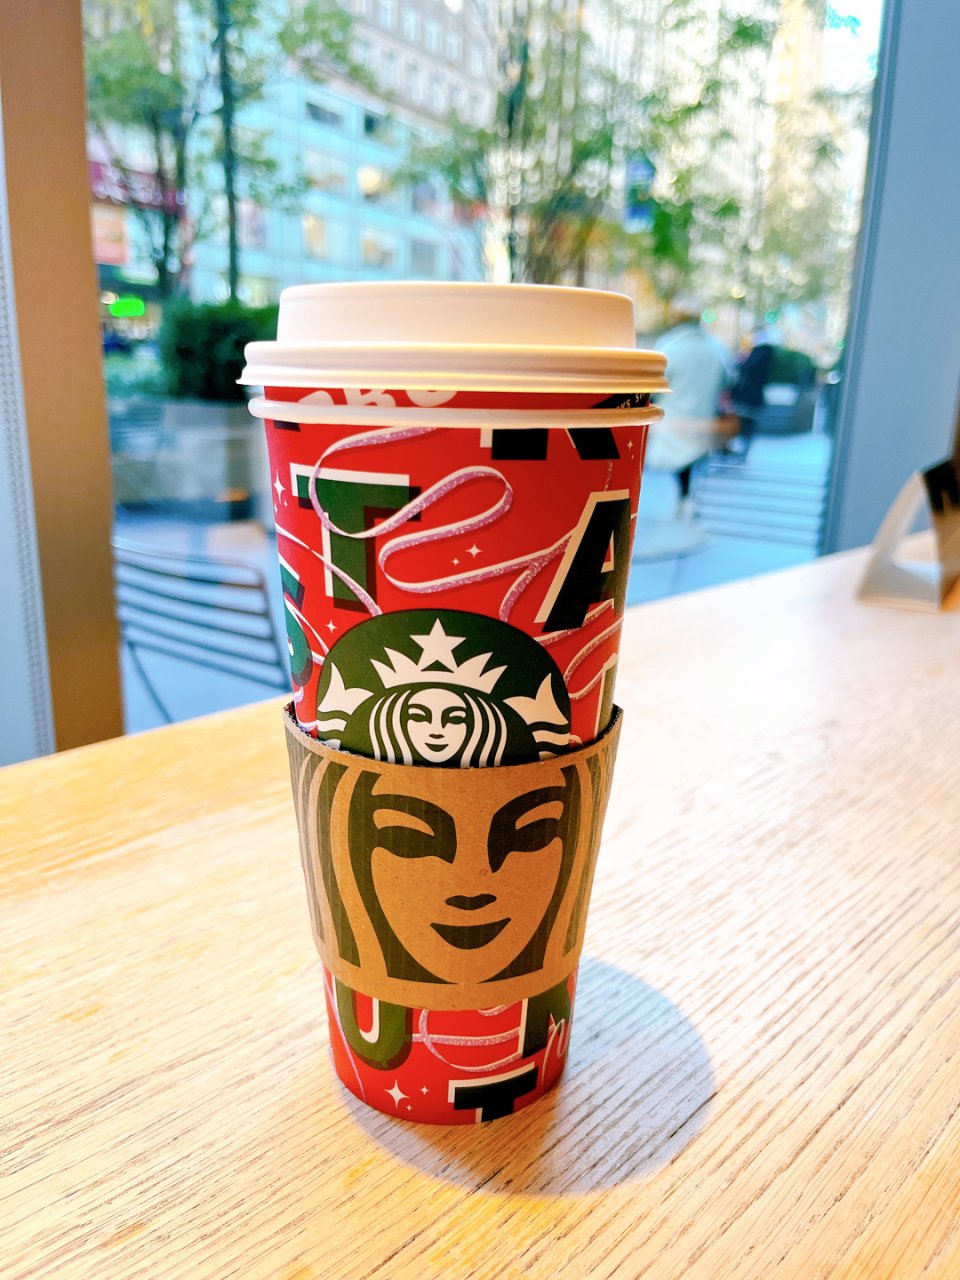 Starbucks 星巴克,Royal English Breakfast Tea: Starbucks Coffee Company